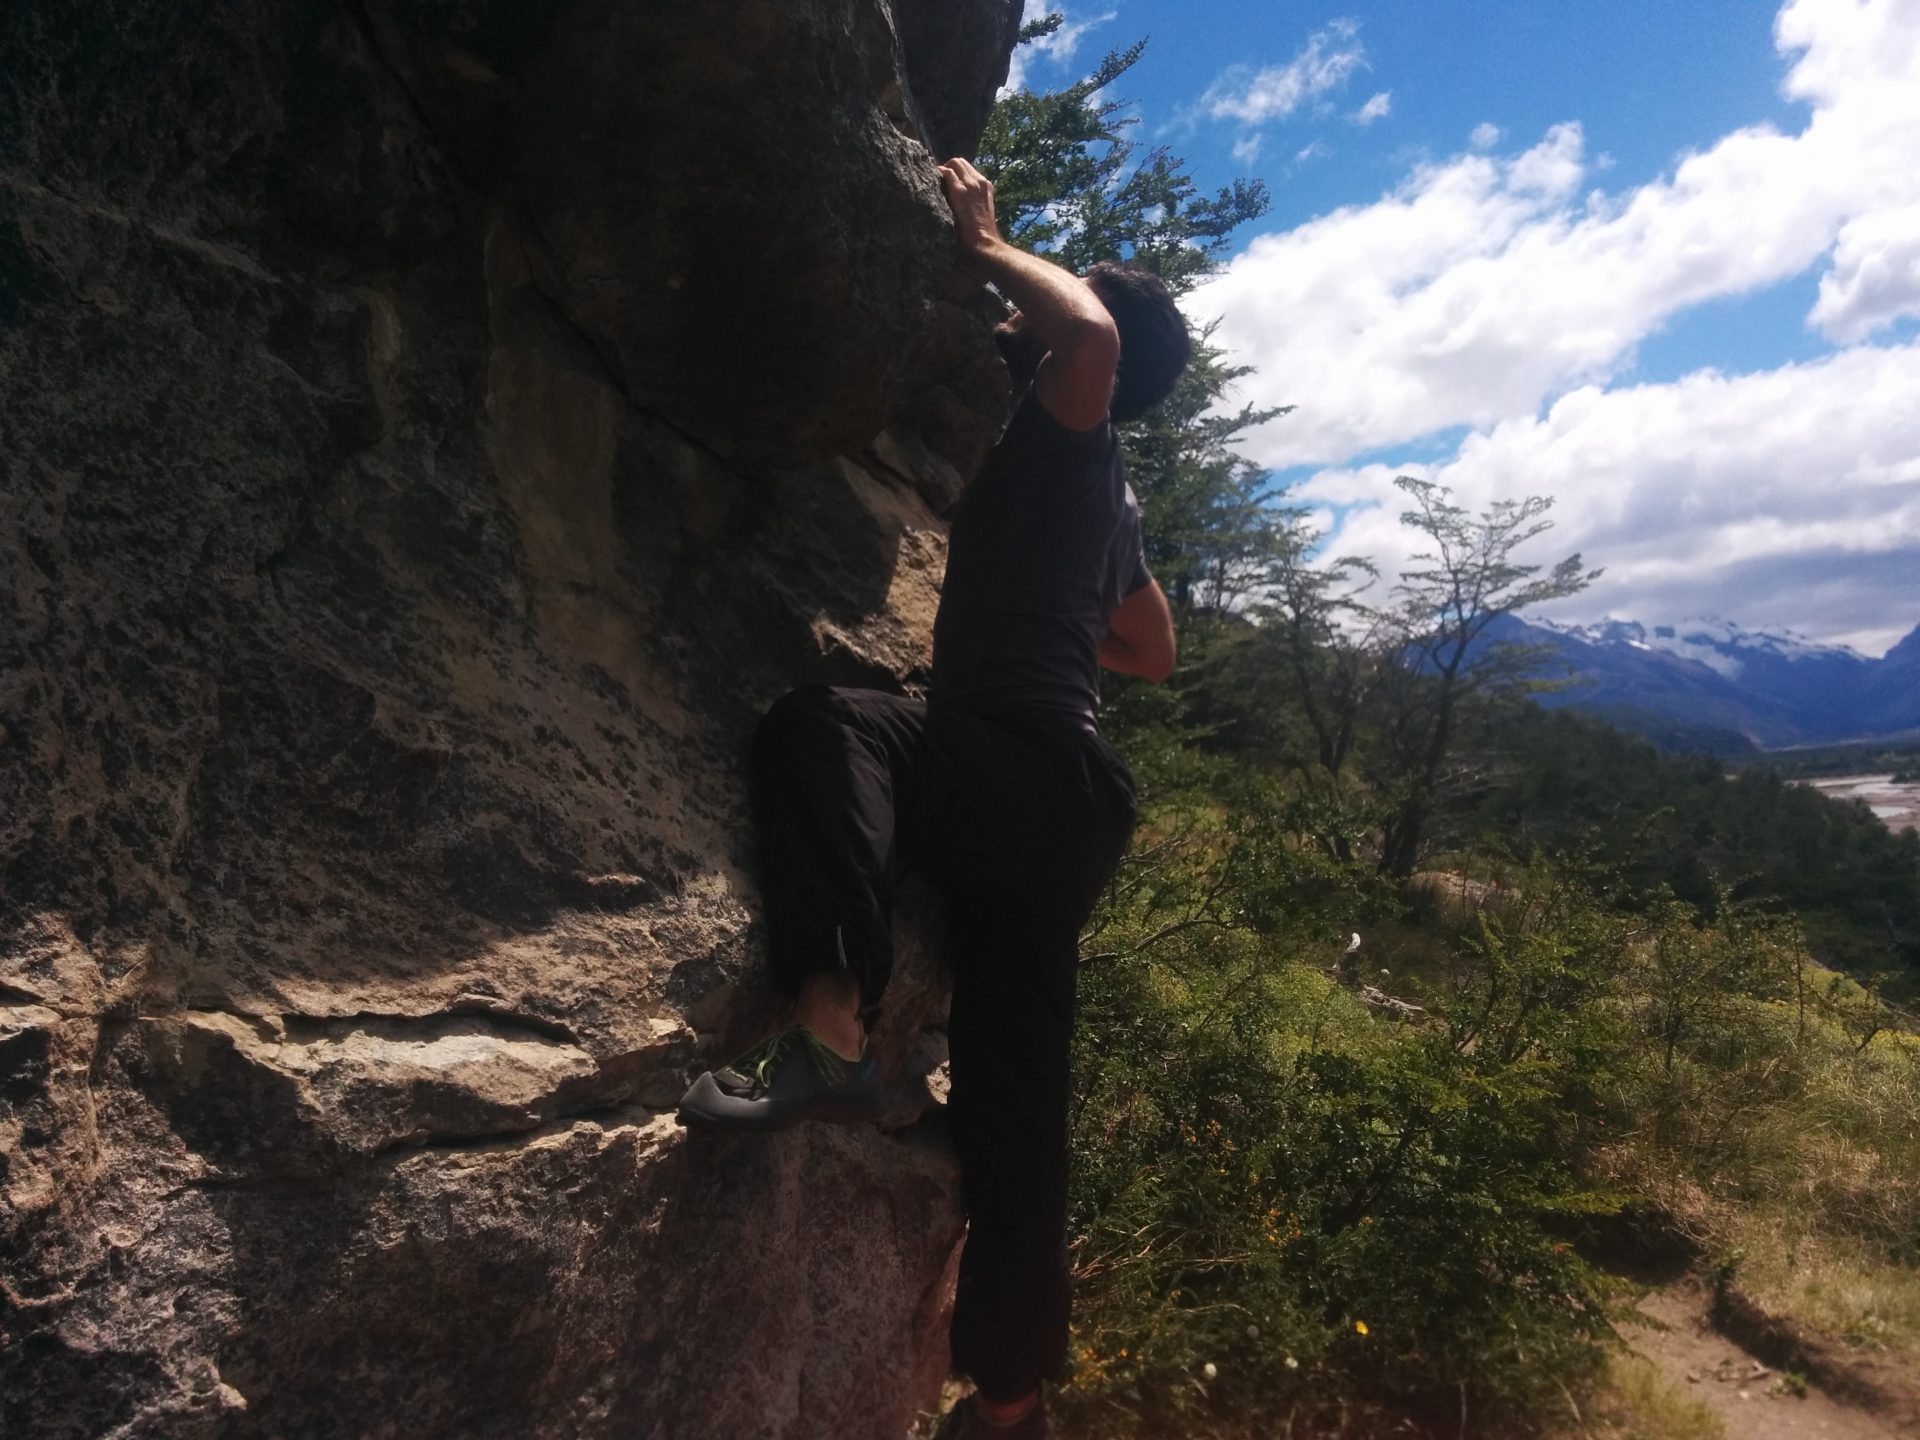 Me climbing on a boulder